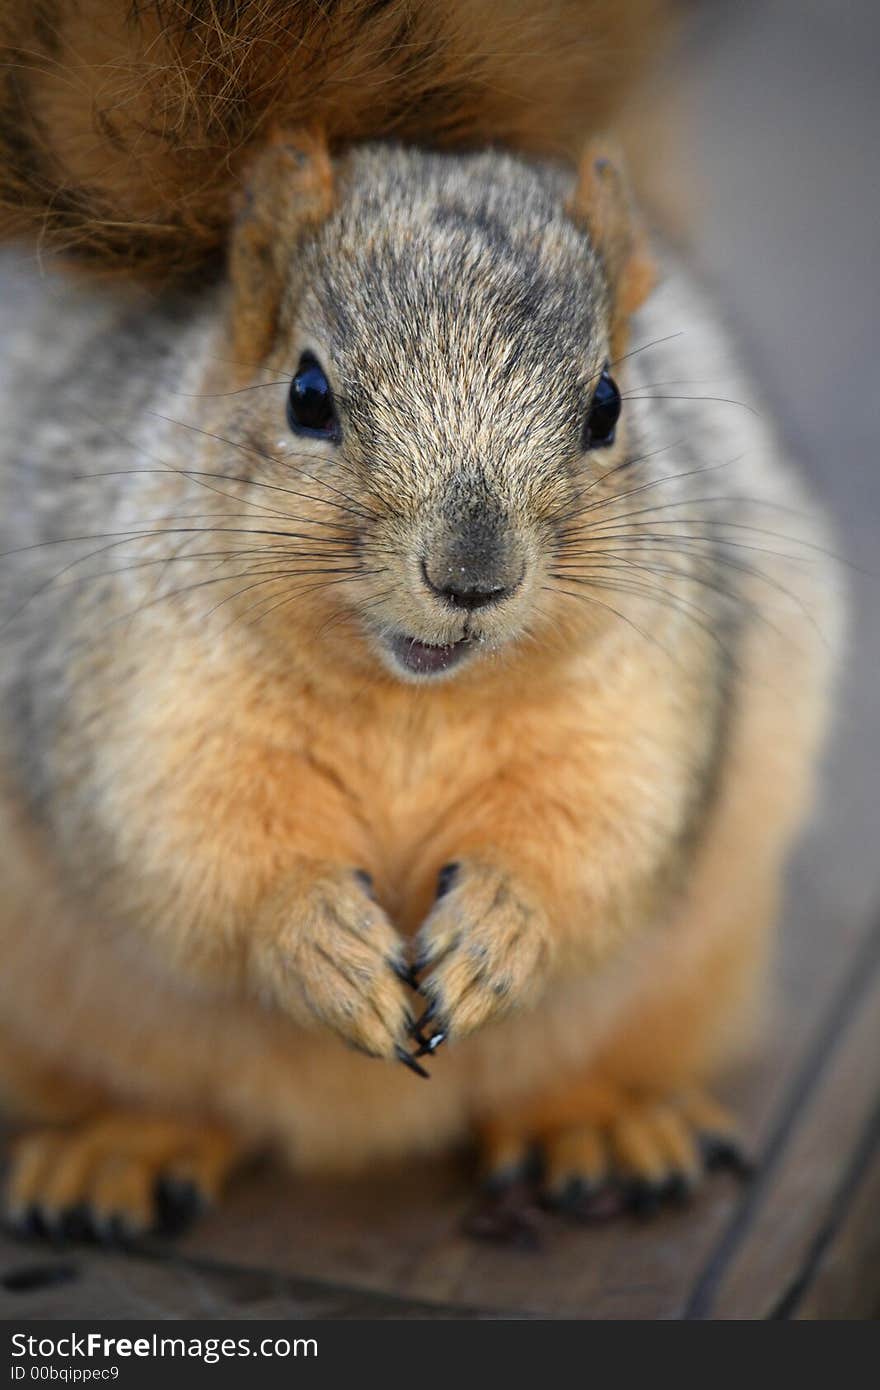 Cute chubby squirrel close up. Cute chubby squirrel close up.